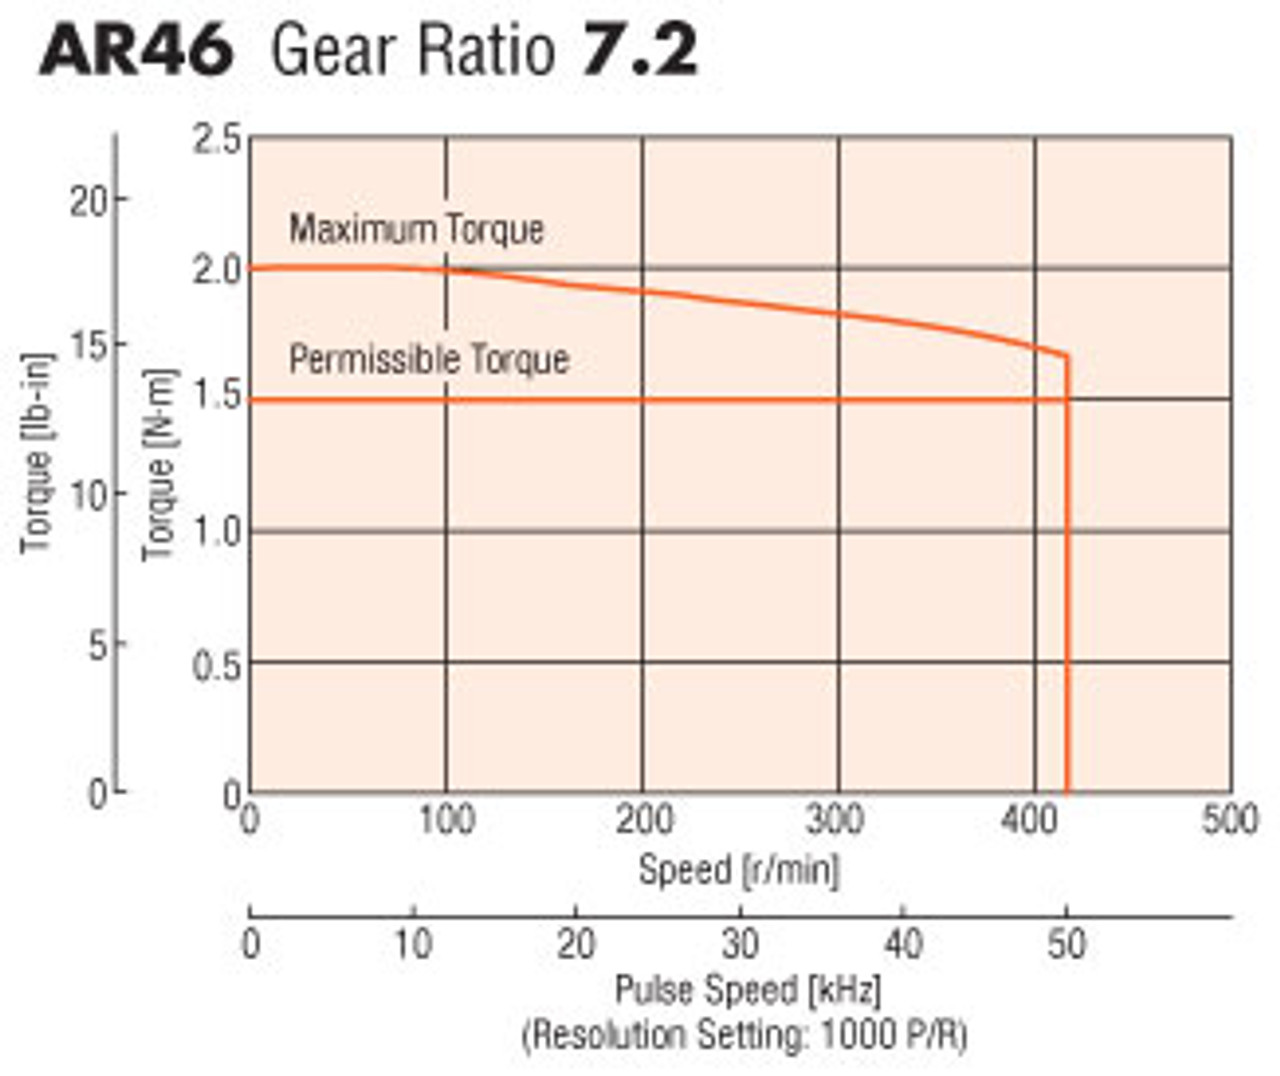 ARM46AC-PS7 - Speed-Torque